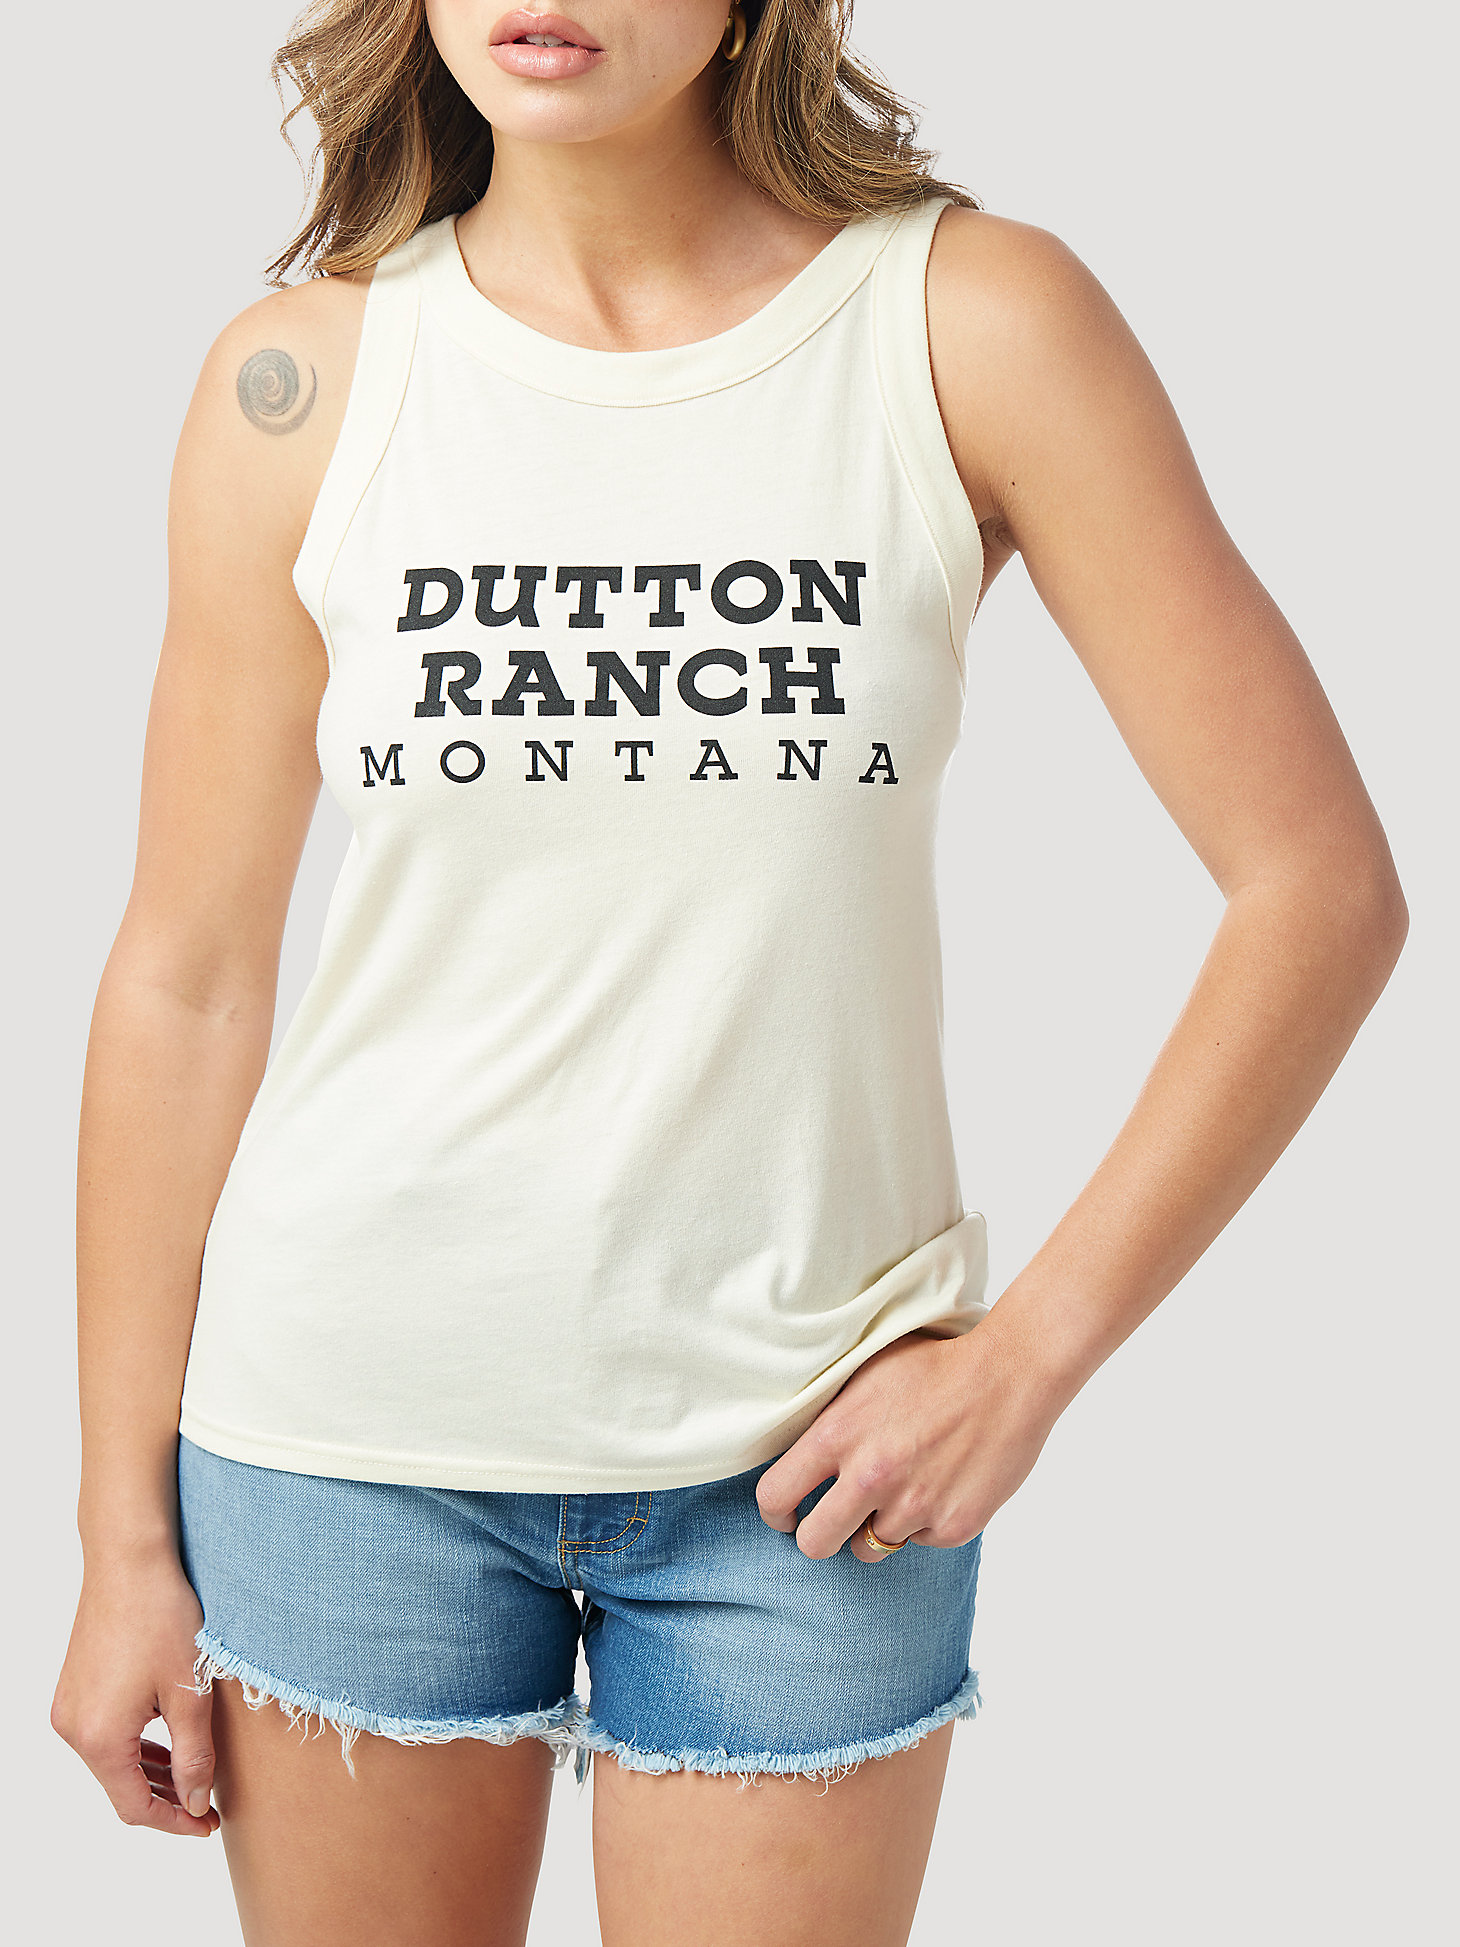 Wrangler x Yellowstone Women's Dutton Ranch Tank in Tofu alternative view 2